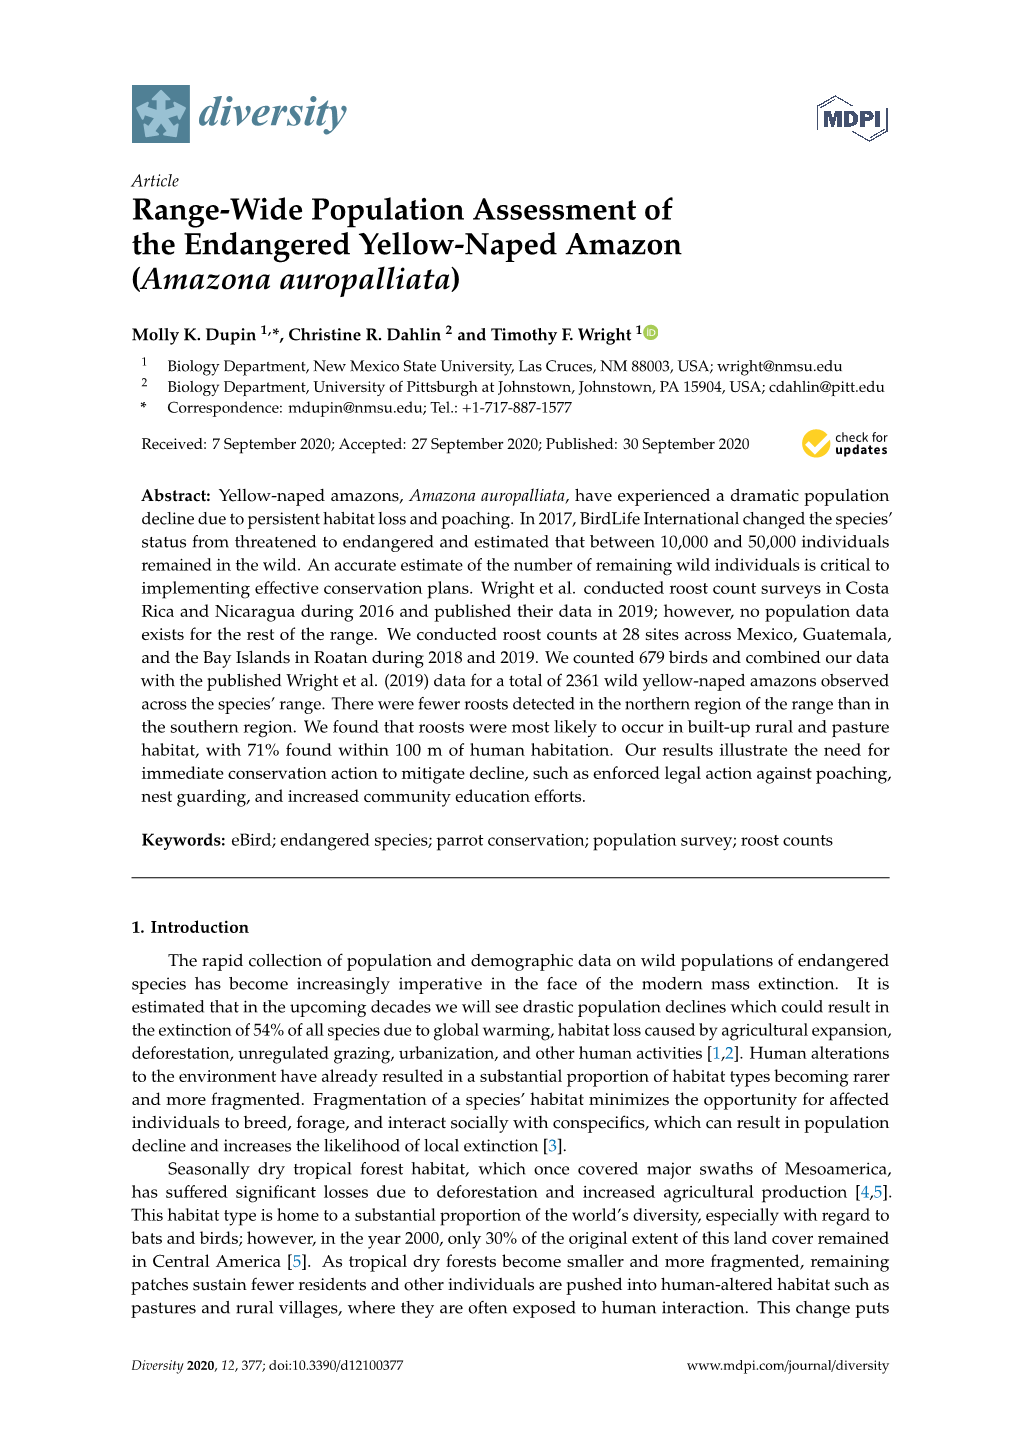 Range-Wide Population Assessment of the Endangered Yellow-Naped Amazon (Amazona Auropalliata)